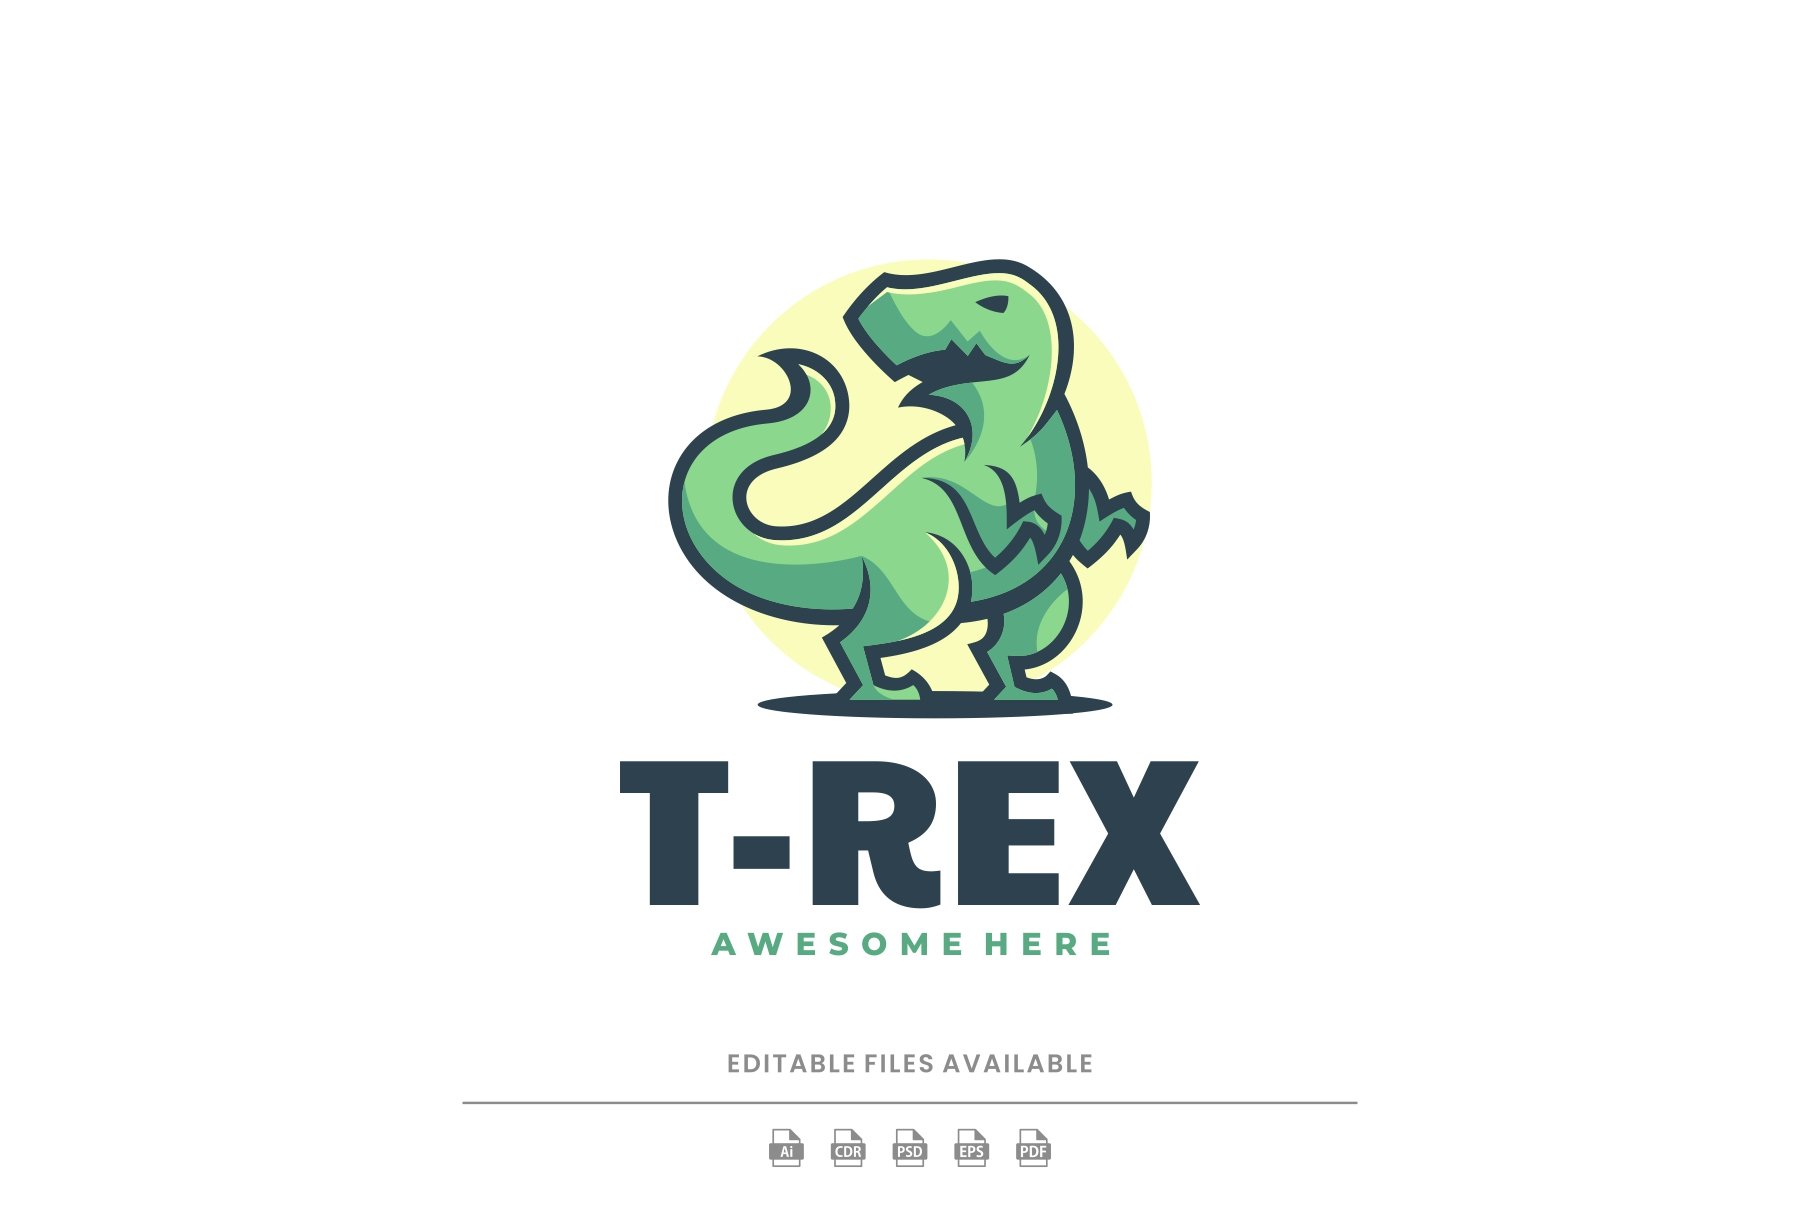 T-Rex Simple Mascot Logo cover image.